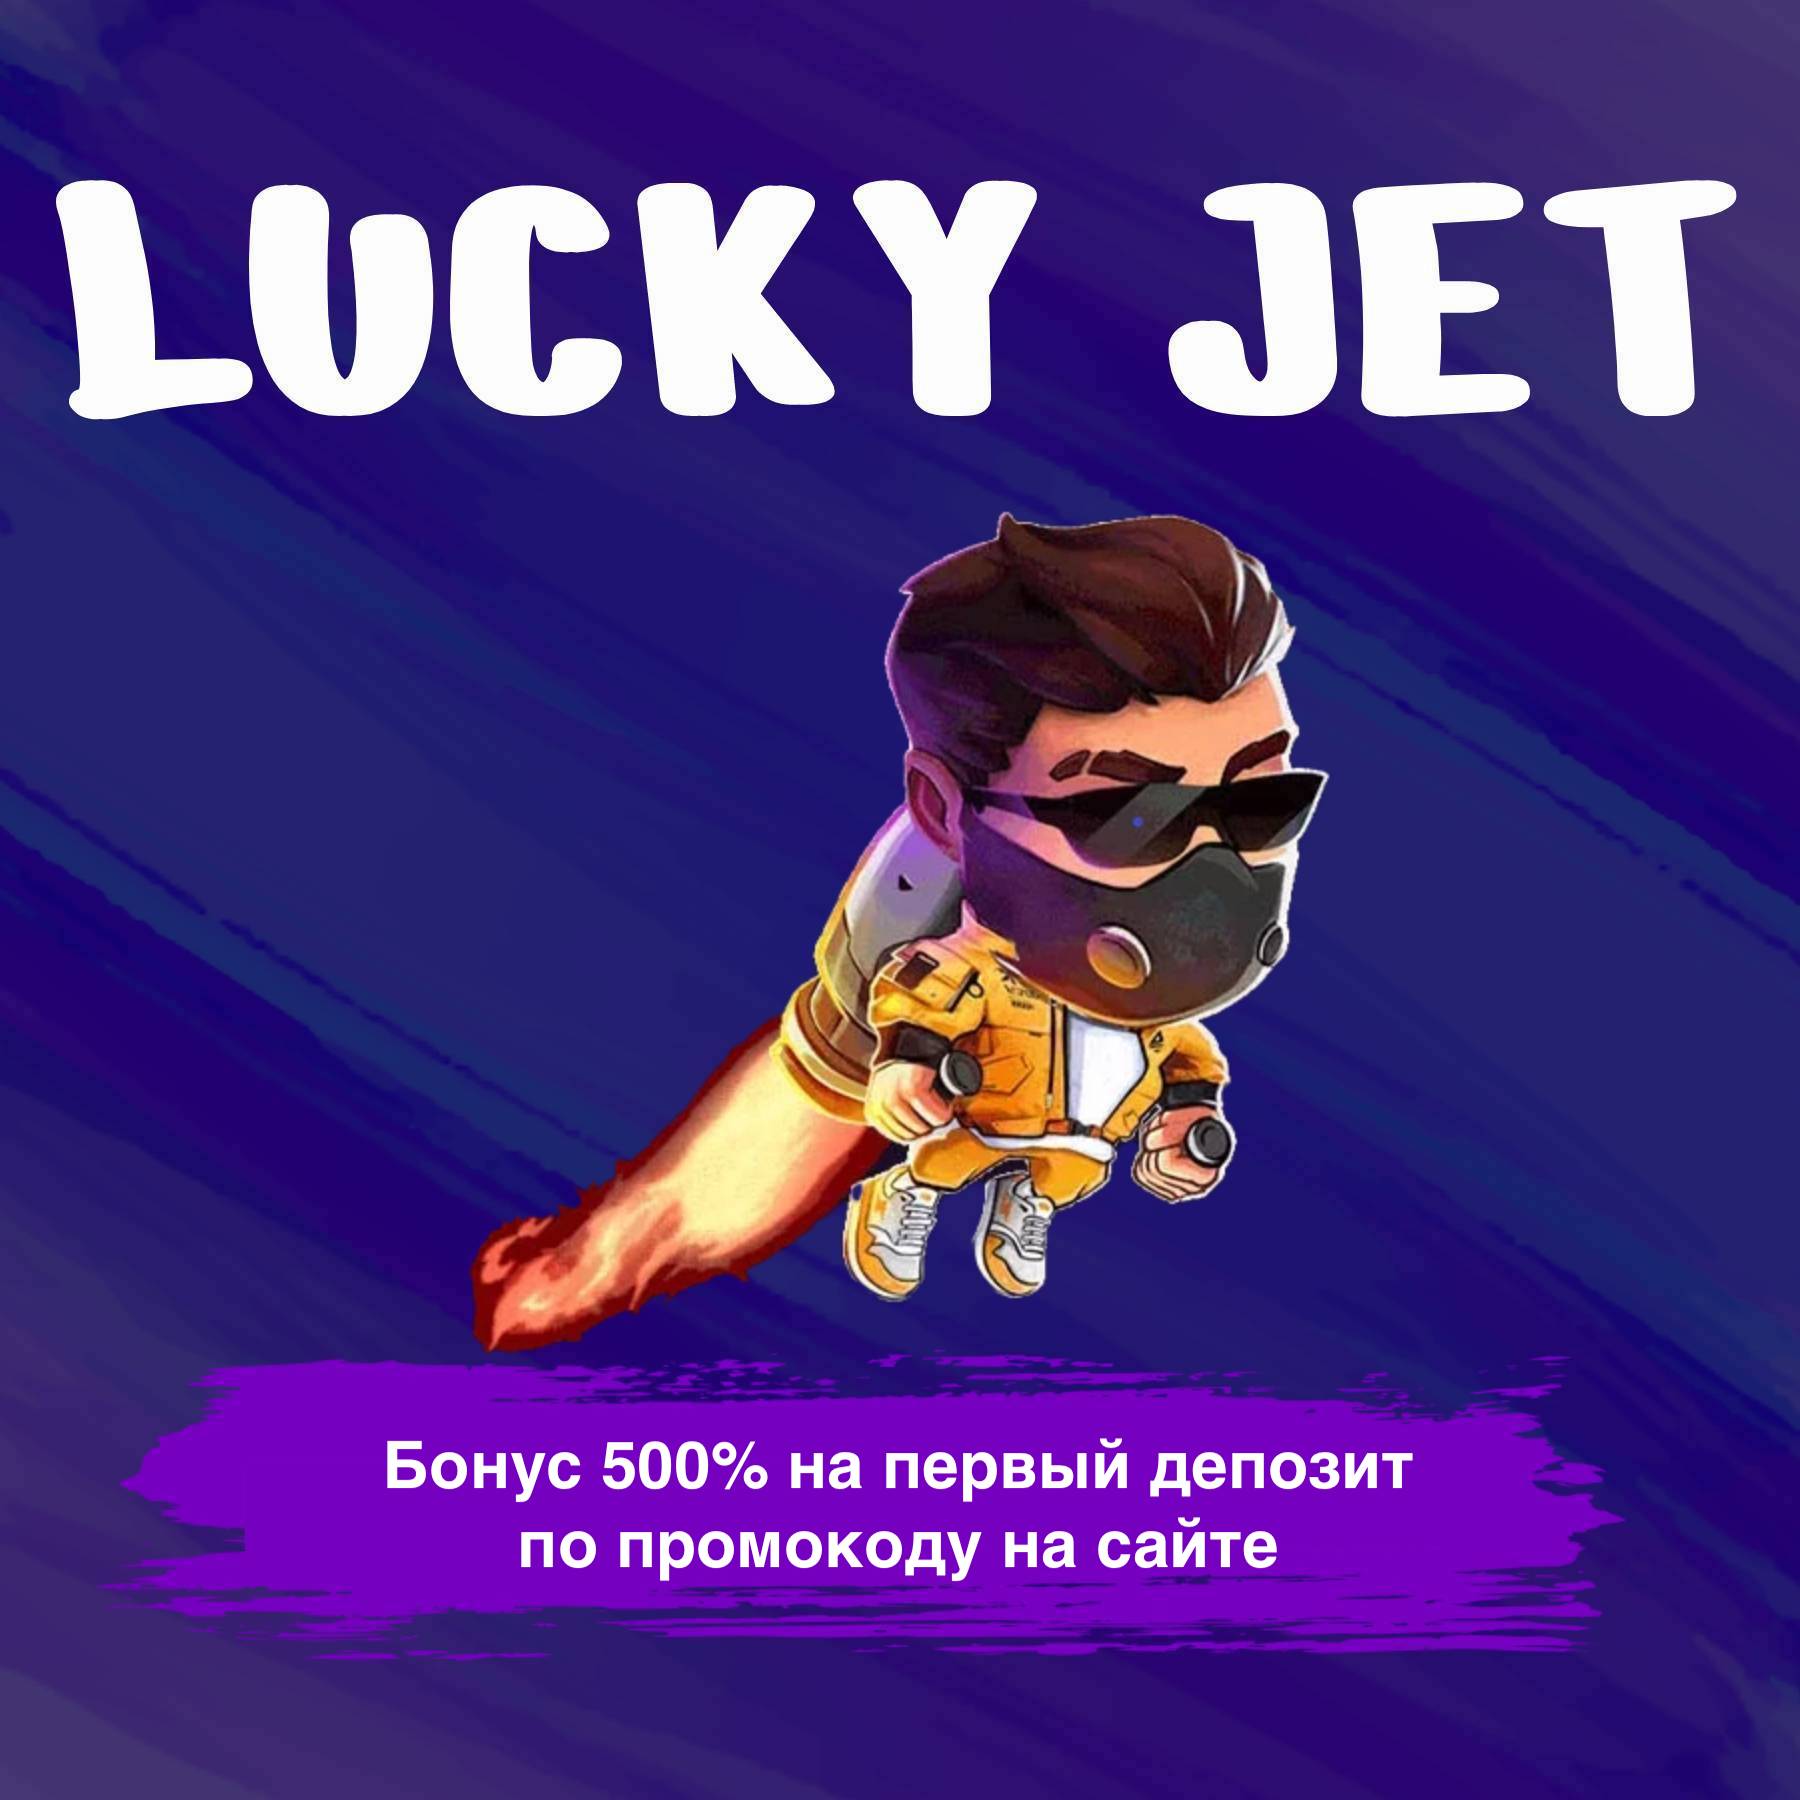 lucky jet promo